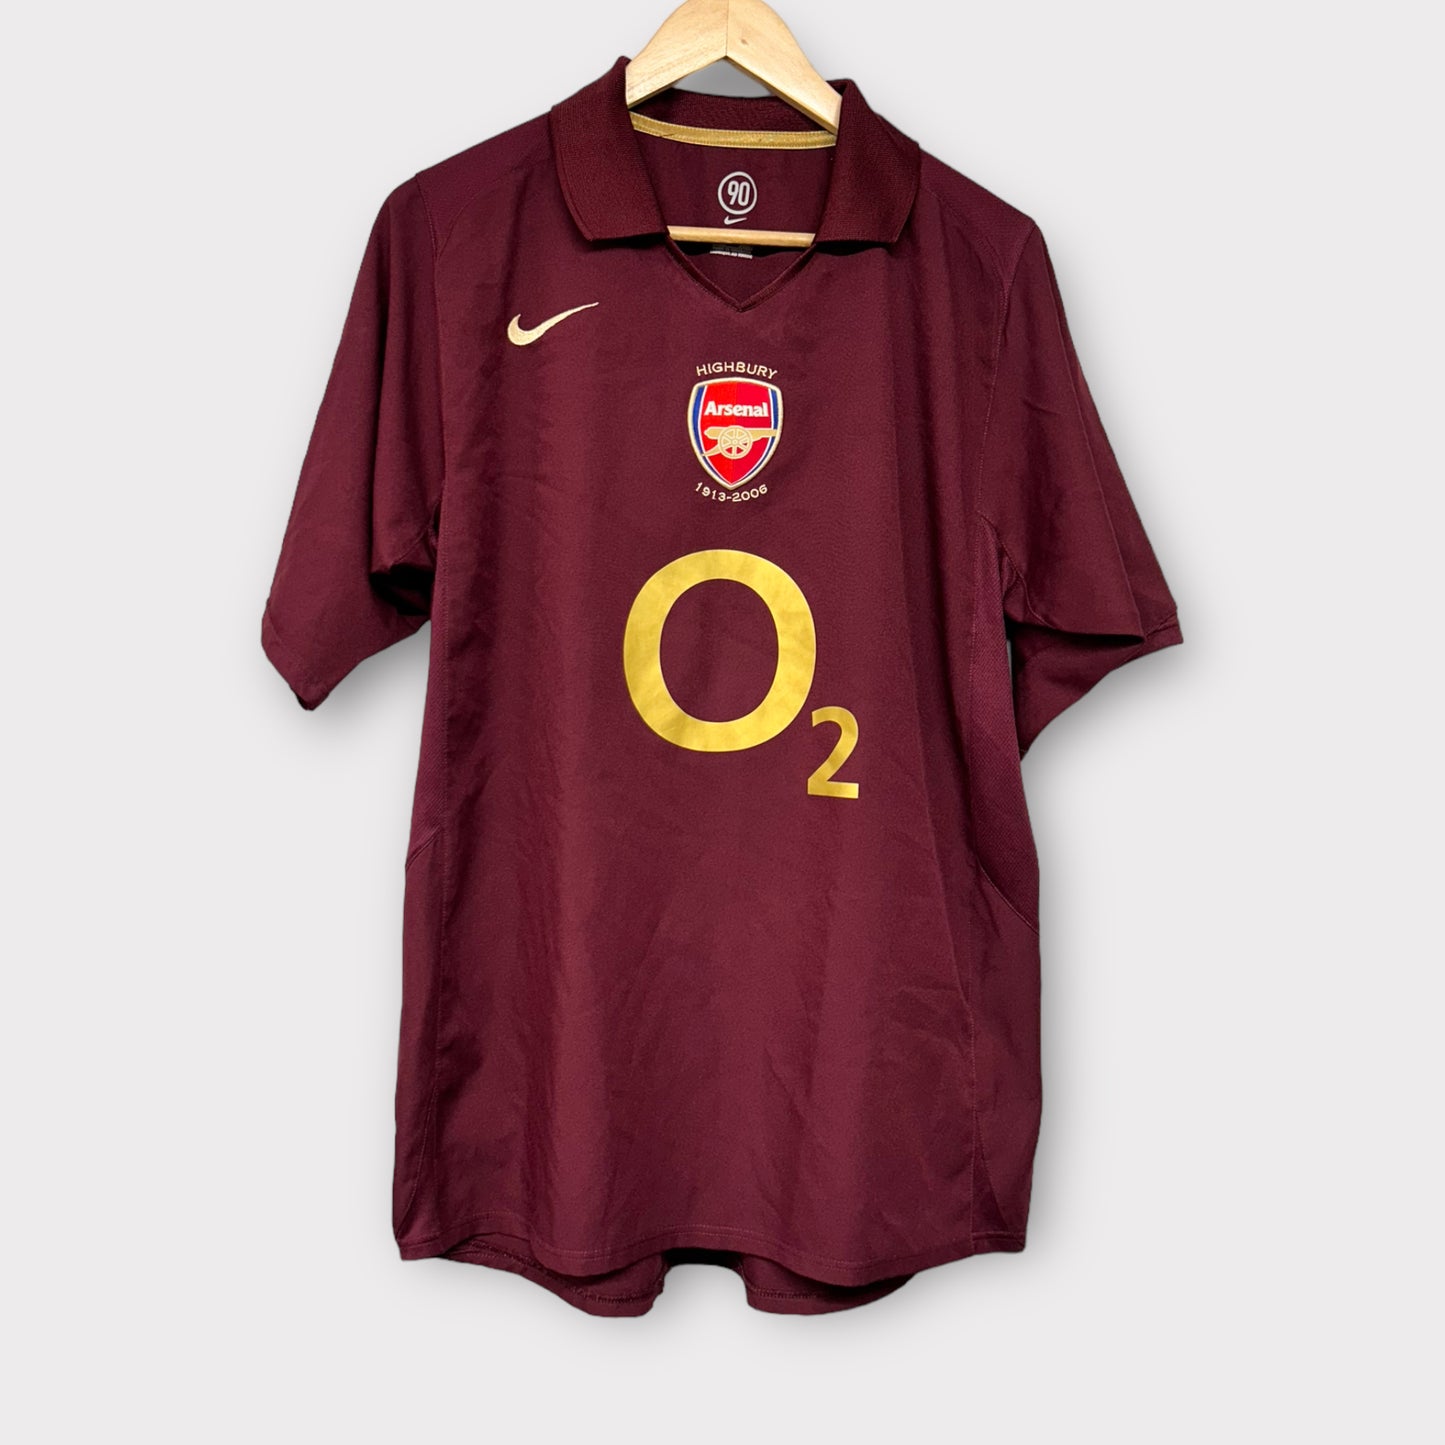 Arsenal 2005/06 Home Shirt (Large)